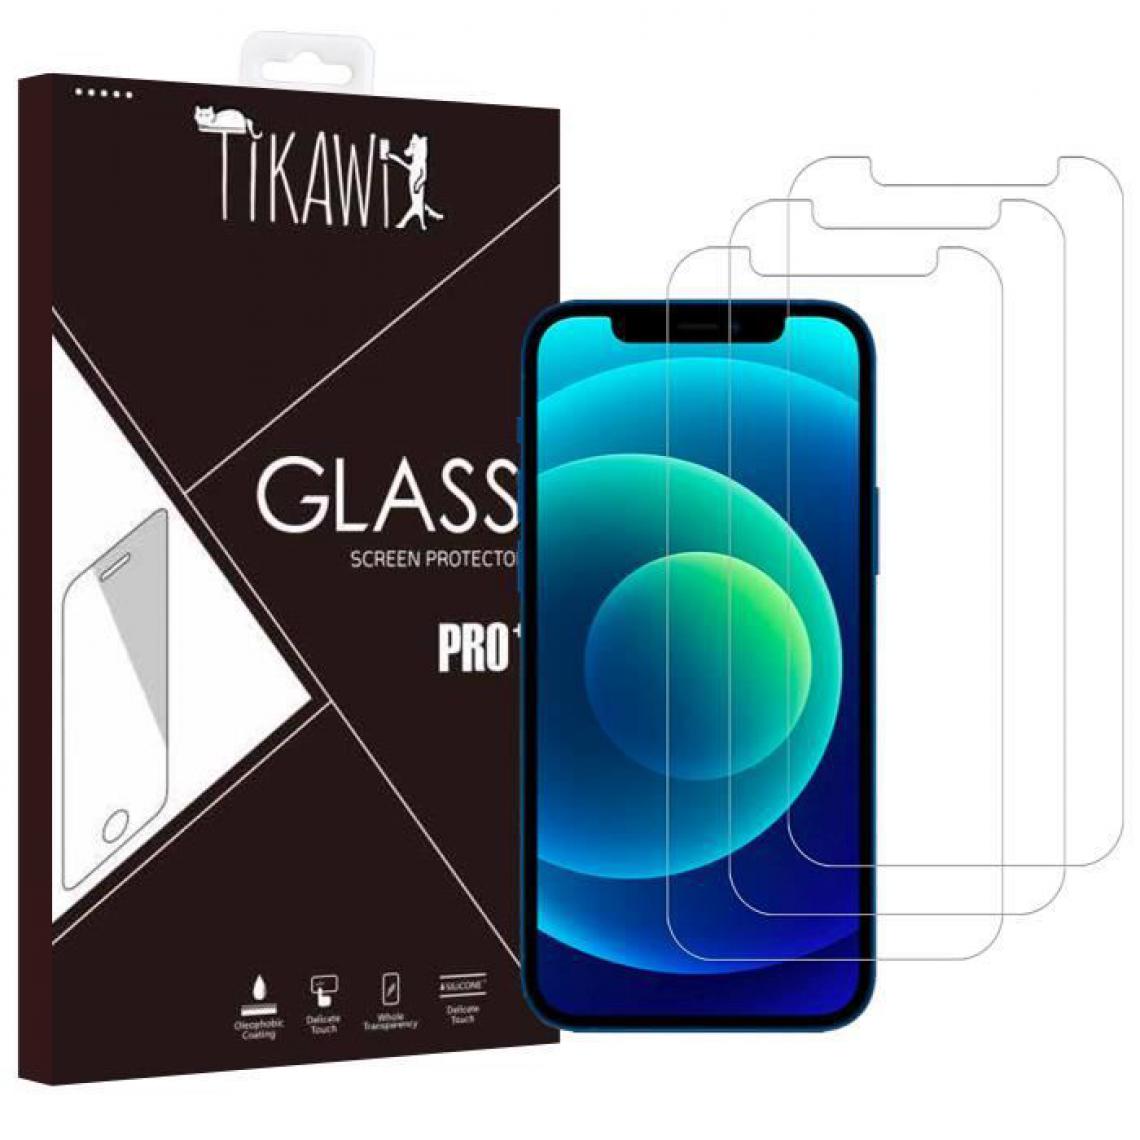 Tikawi - Tikawi x3 Verre trempé 9H I - Protection écran smartphone